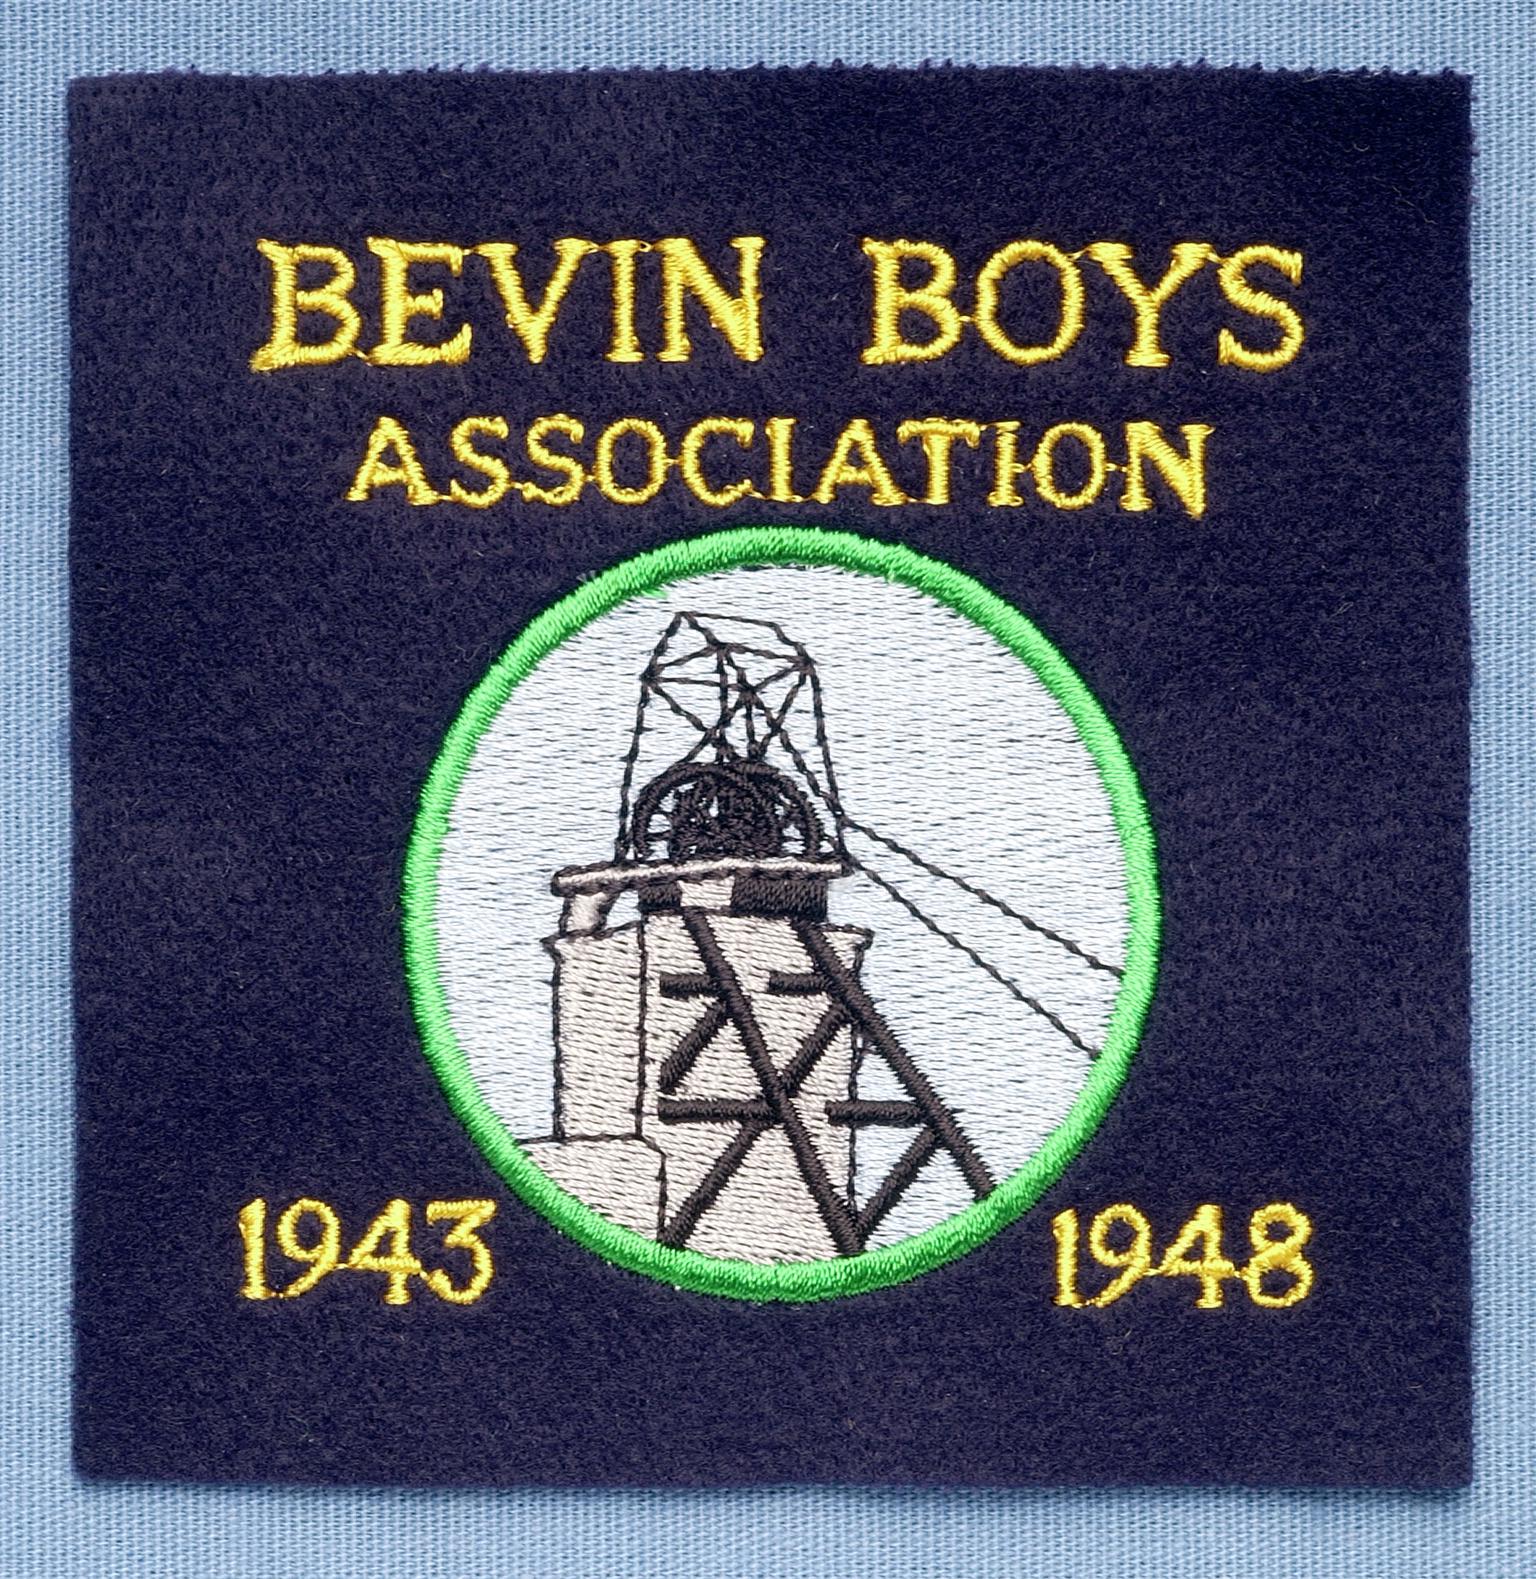 Bevin Boys Association 1943-1948, blazer badge